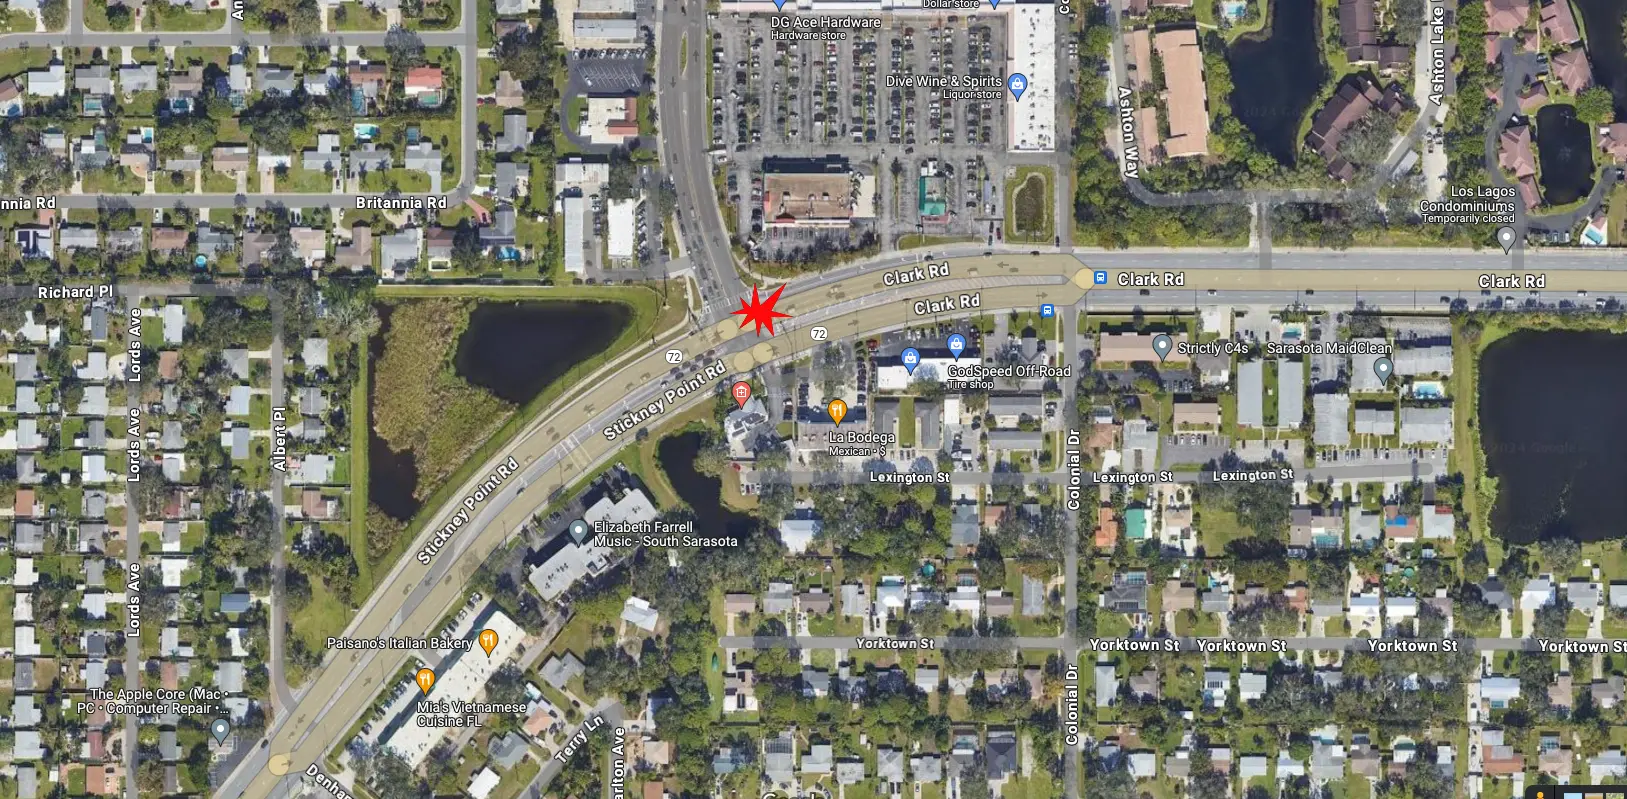  Sarasota Pedestrian Dies After Being Hit While Crossing Clark Rd Saturday Night 